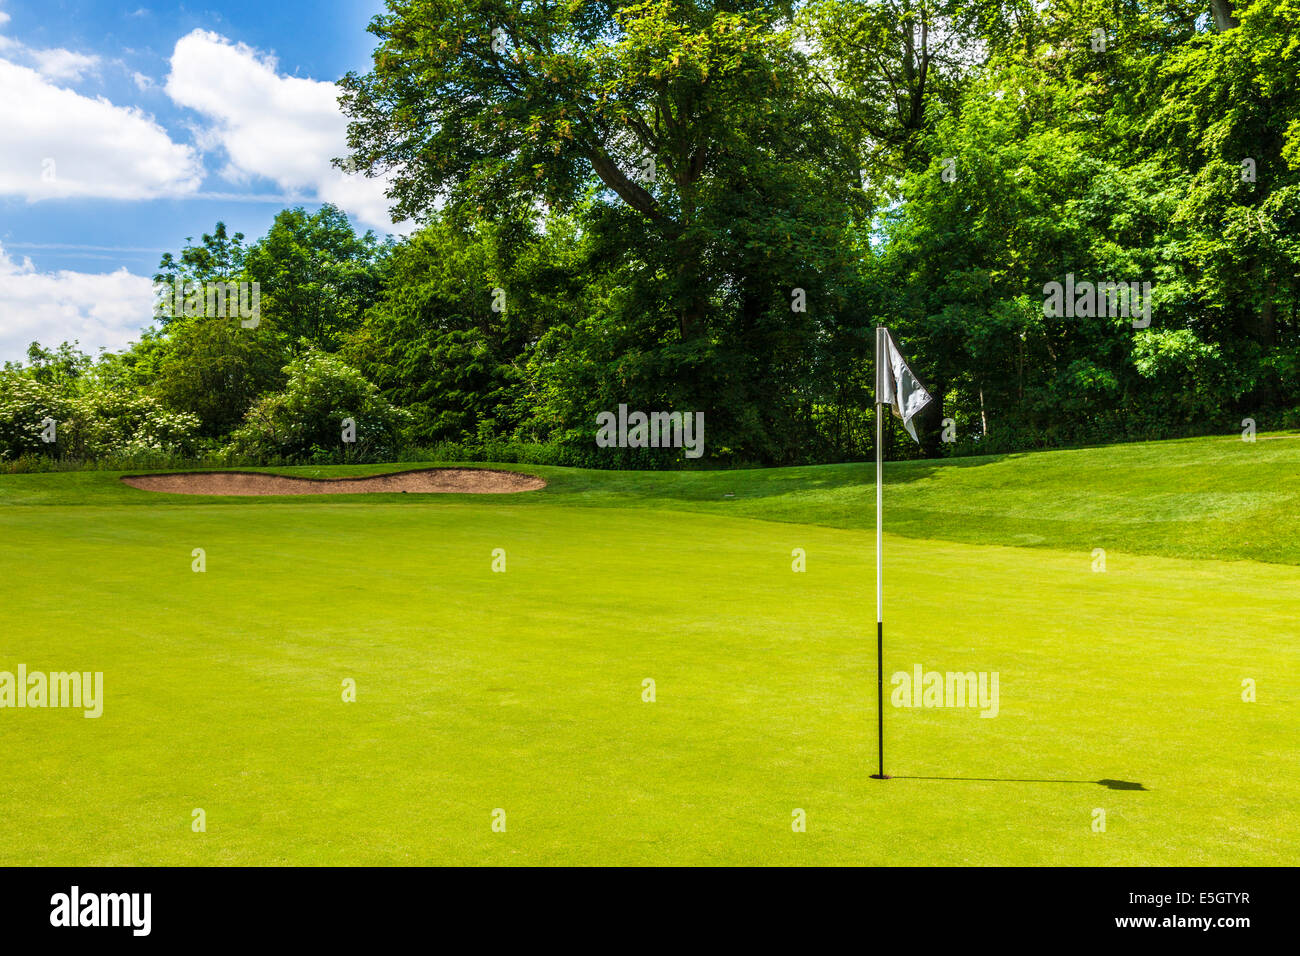 Un bunker e putting green con flagstick e foro su un tipico campo da golf. Foto Stock